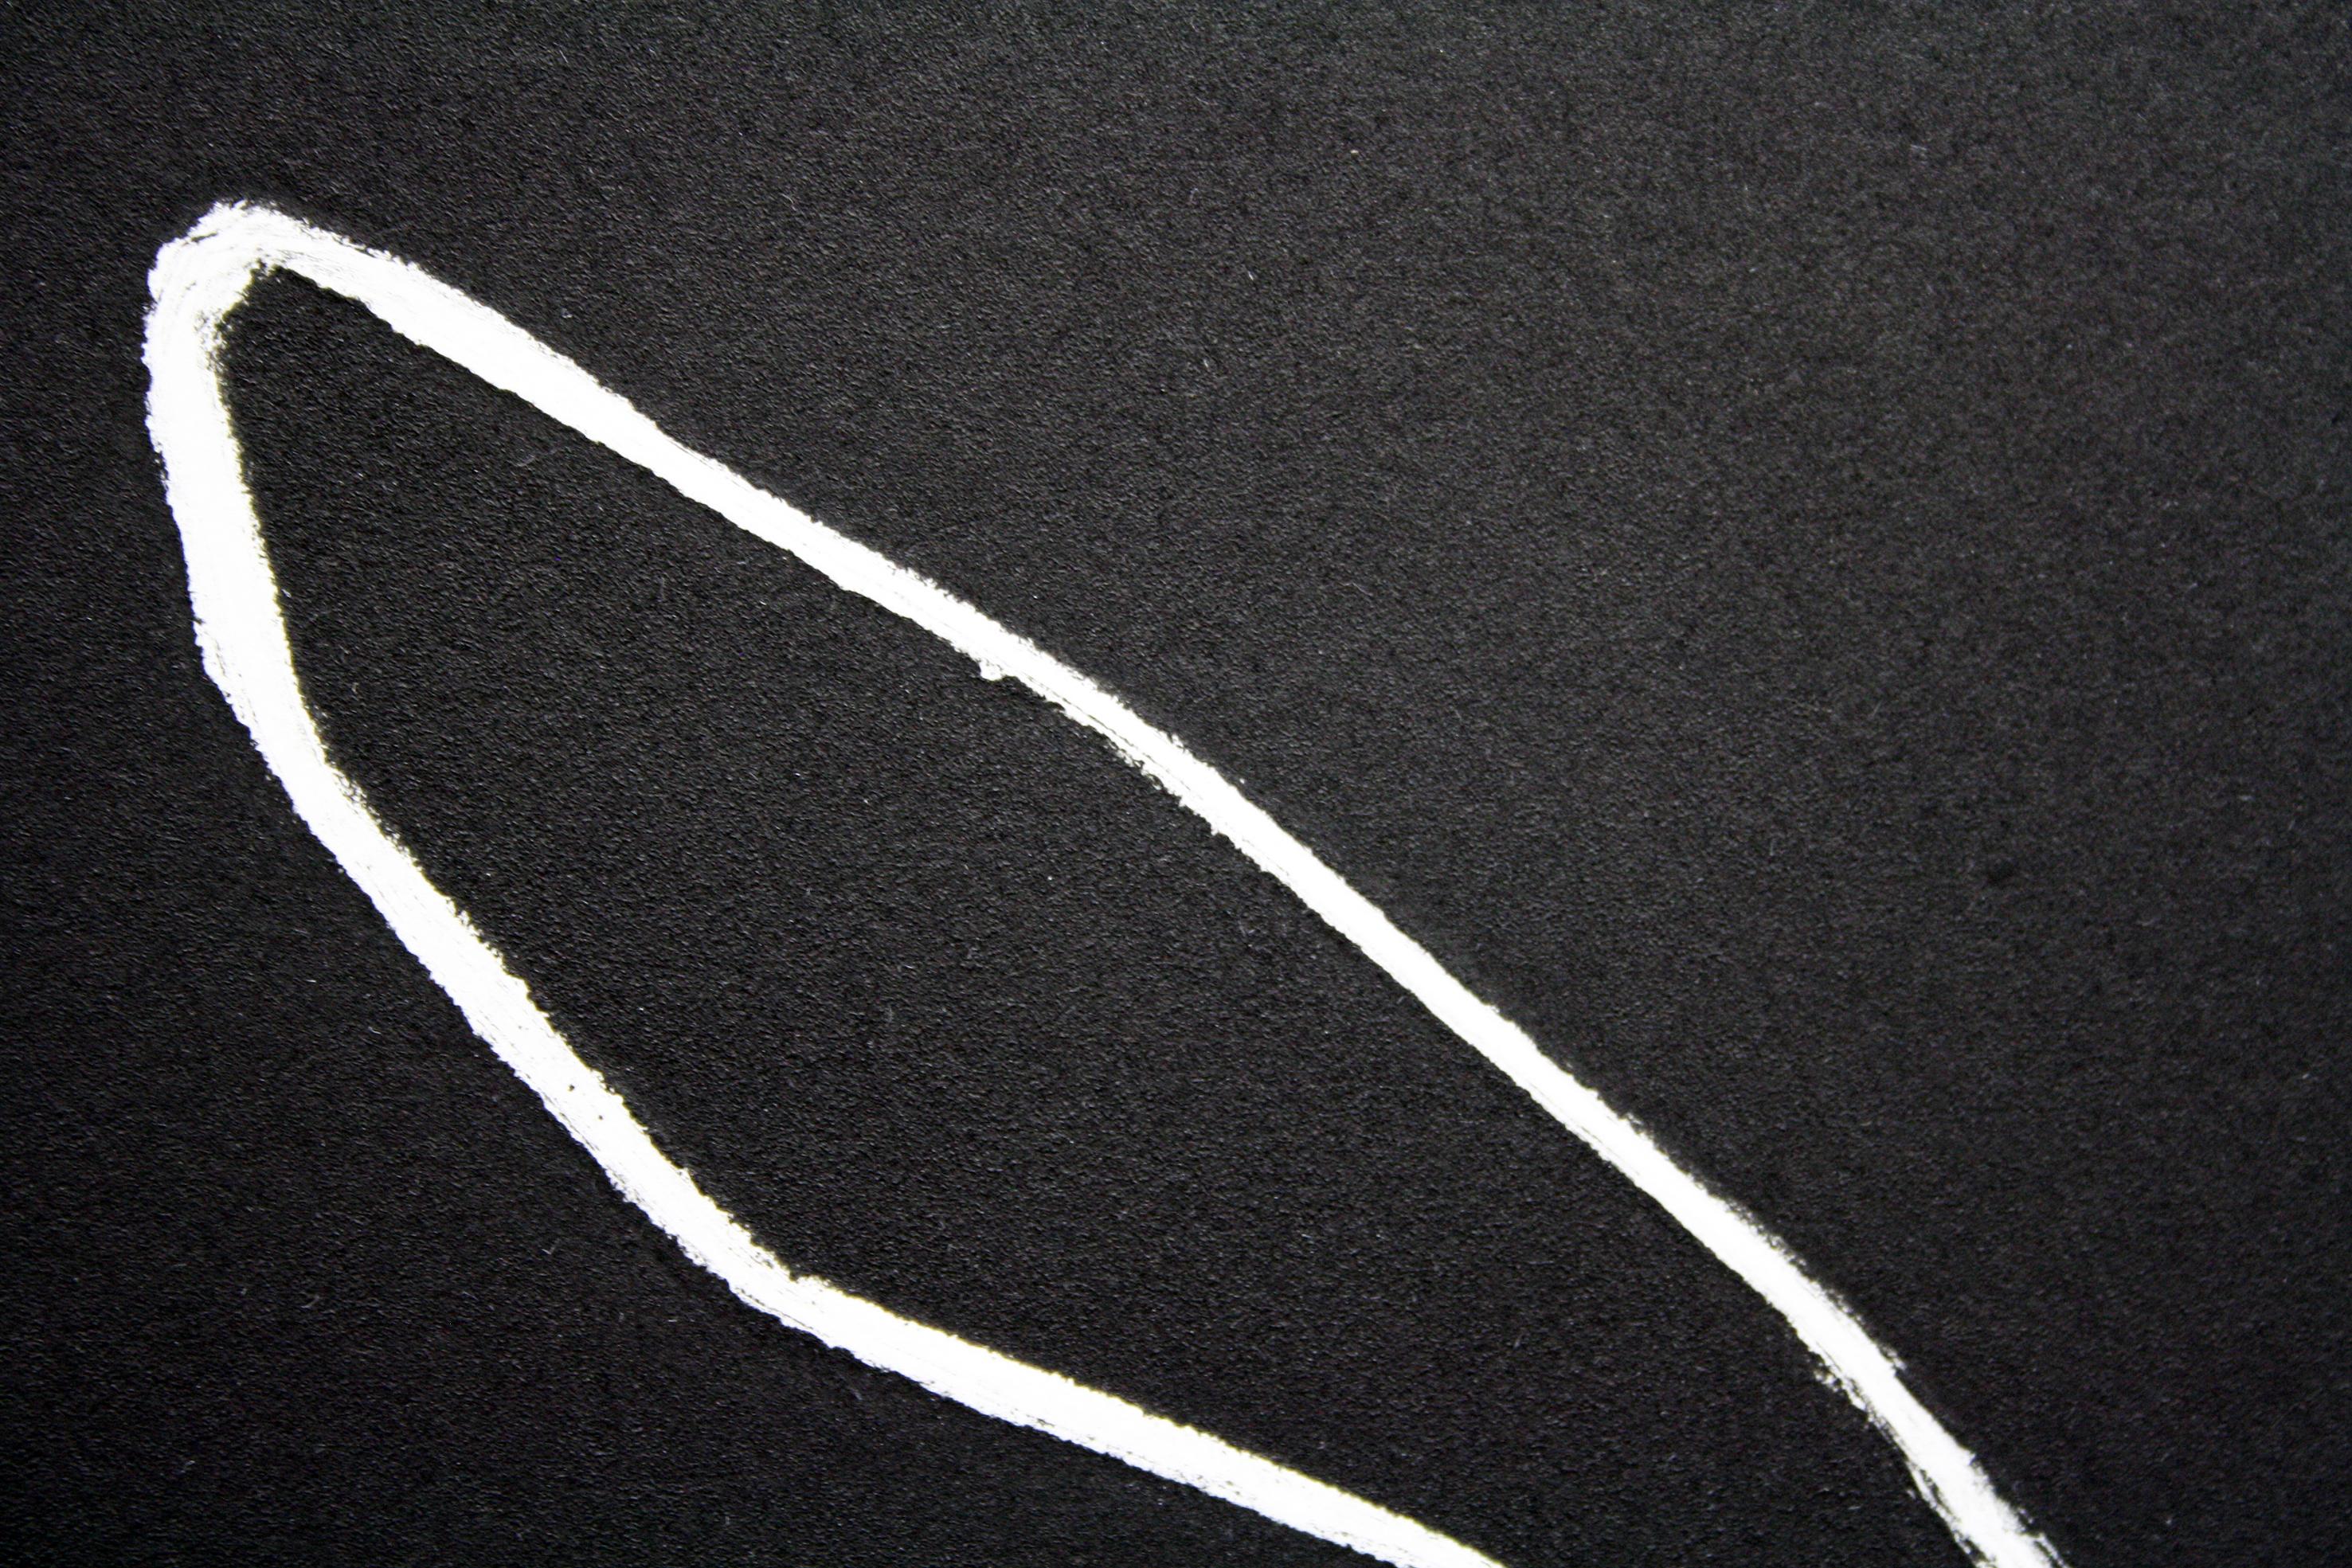 184J210831 - Black Abstract Print by Pierre Muckensturm